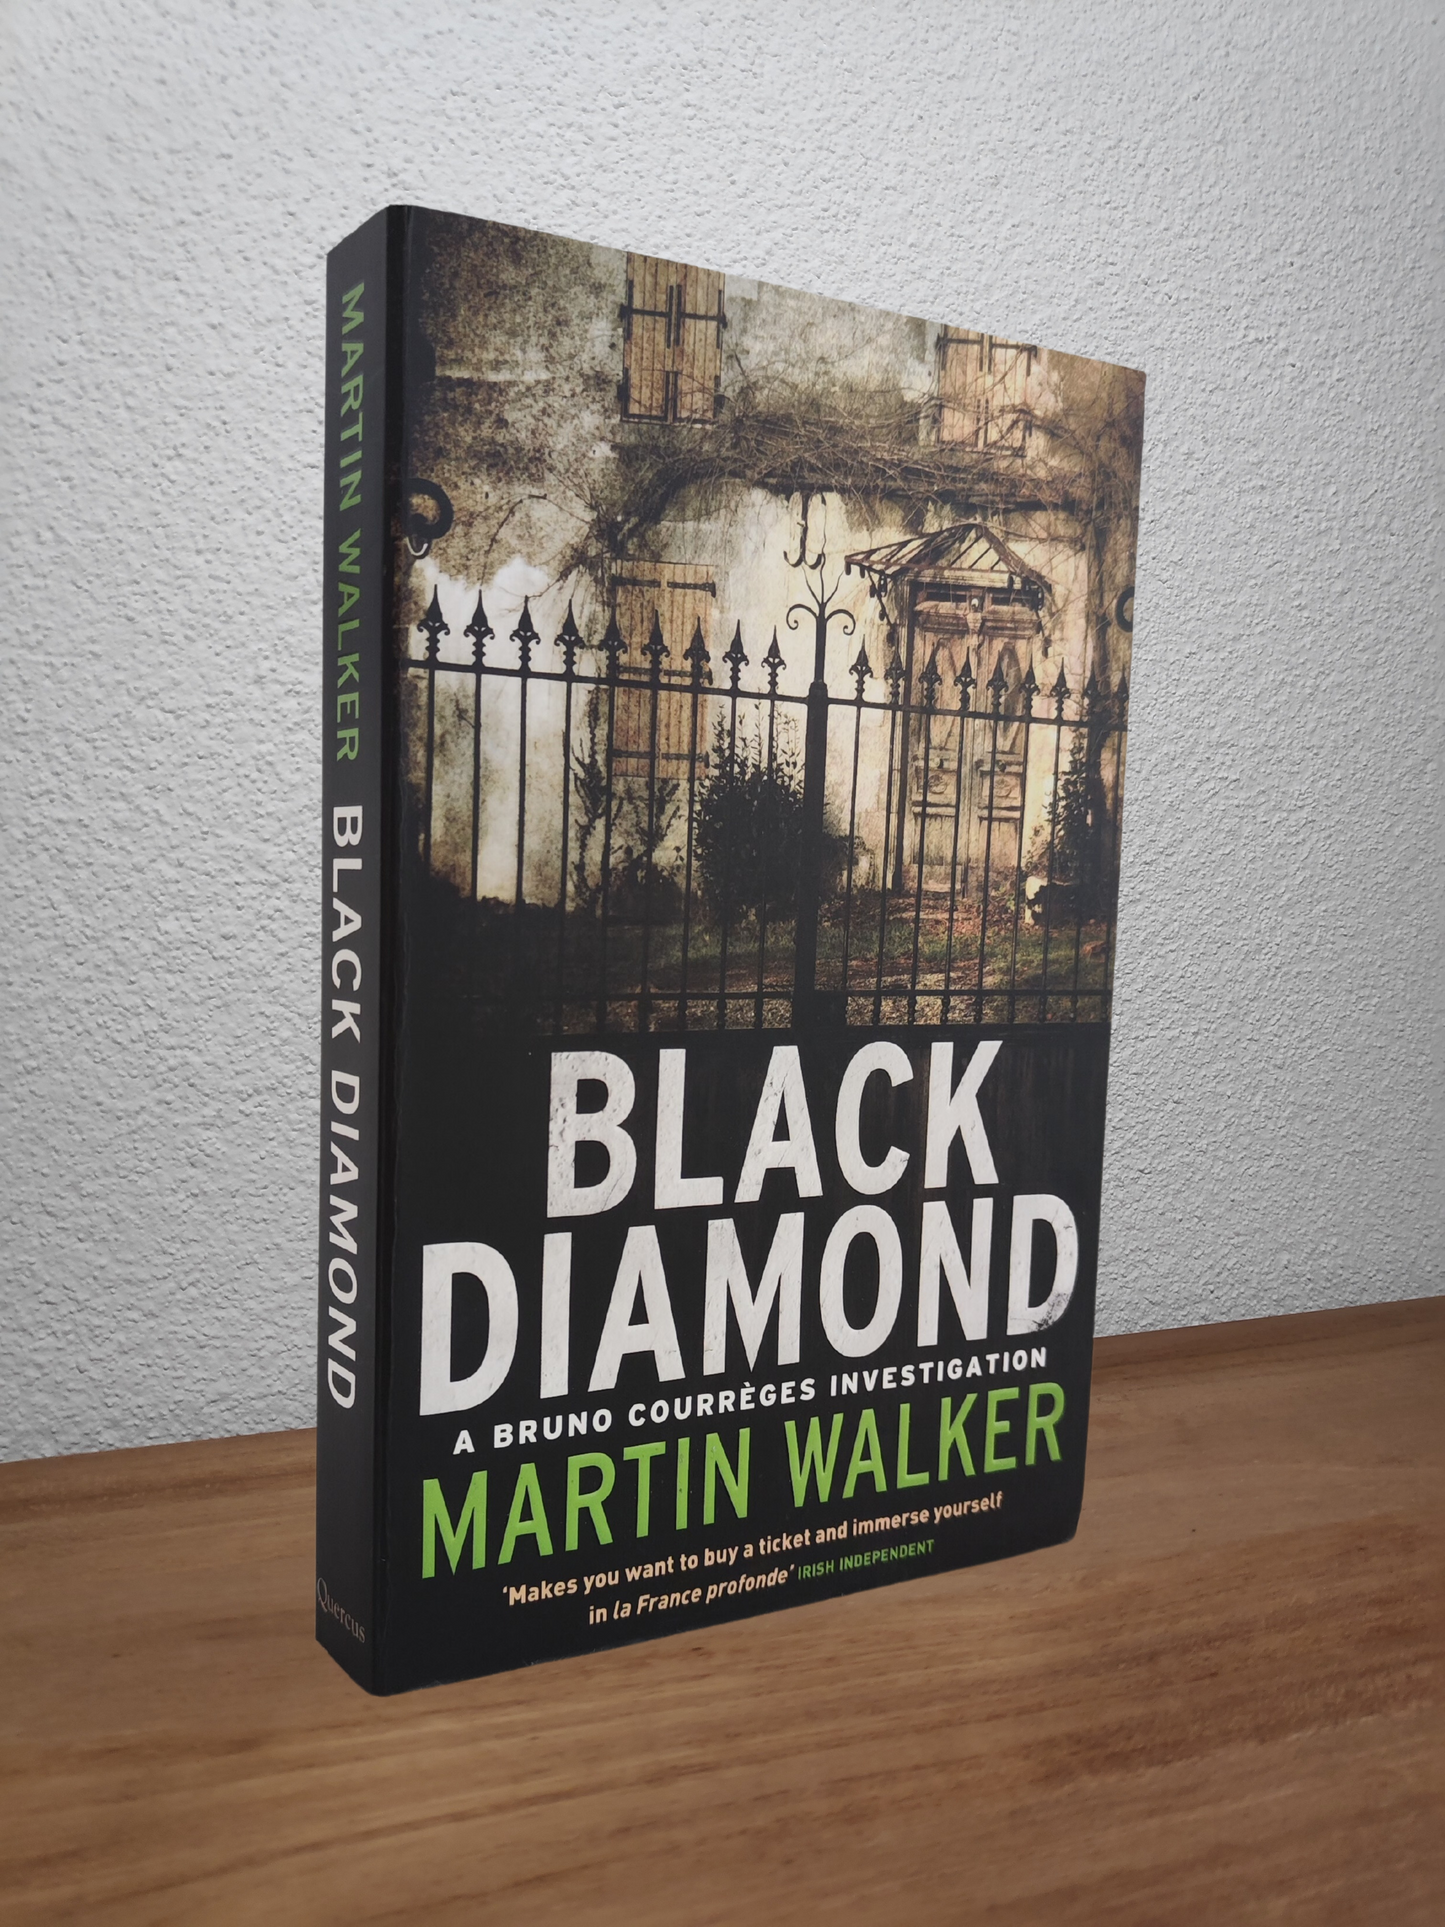 Martin Walker - Black Diamond (Bruno, Chief of Police #3)